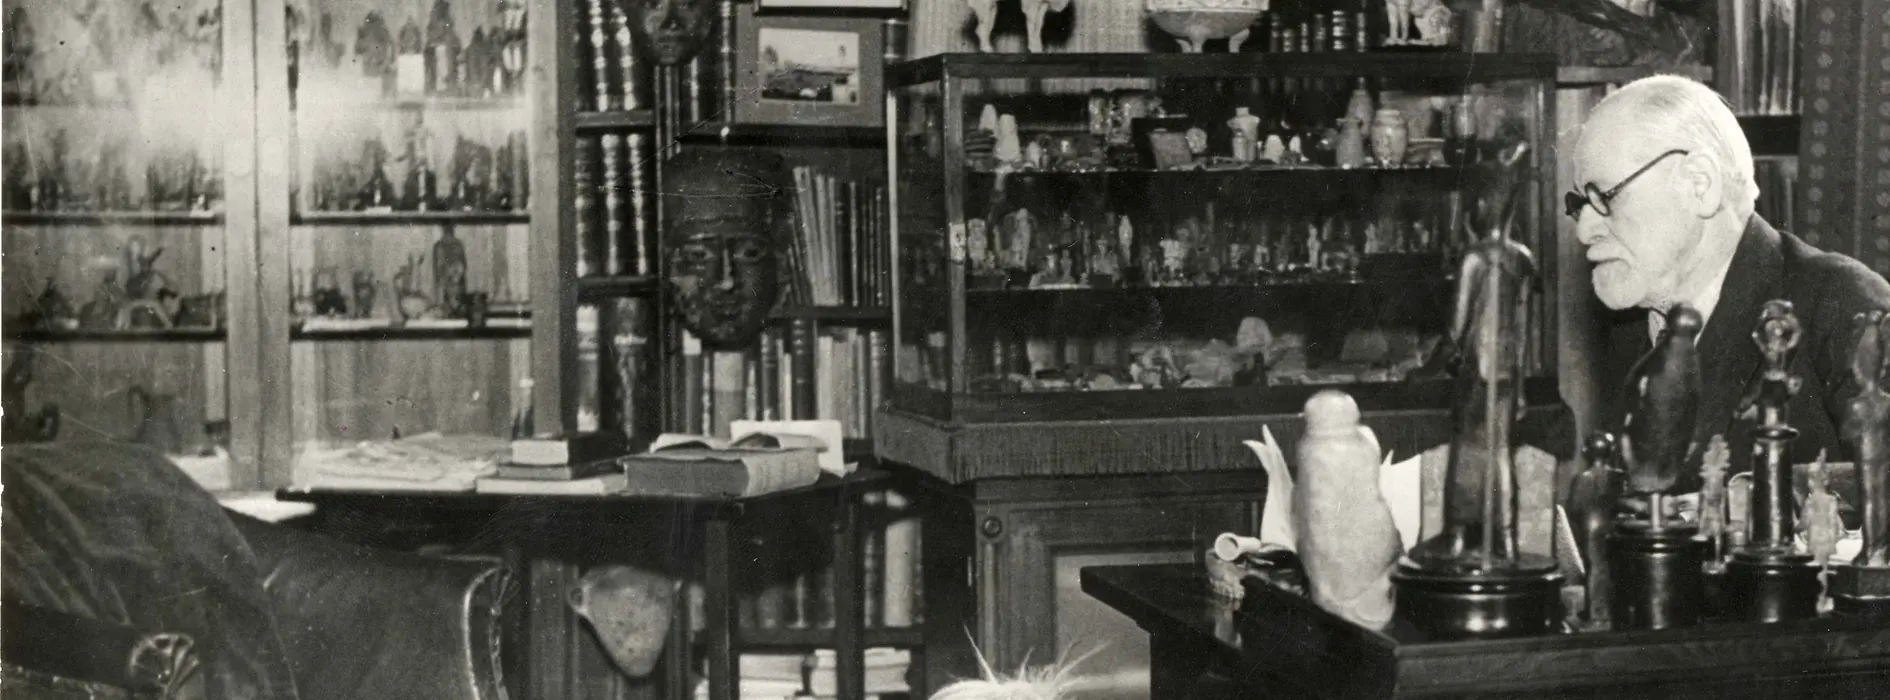 Sigmund Freud dans son bureau avec son chow-chow, 1937